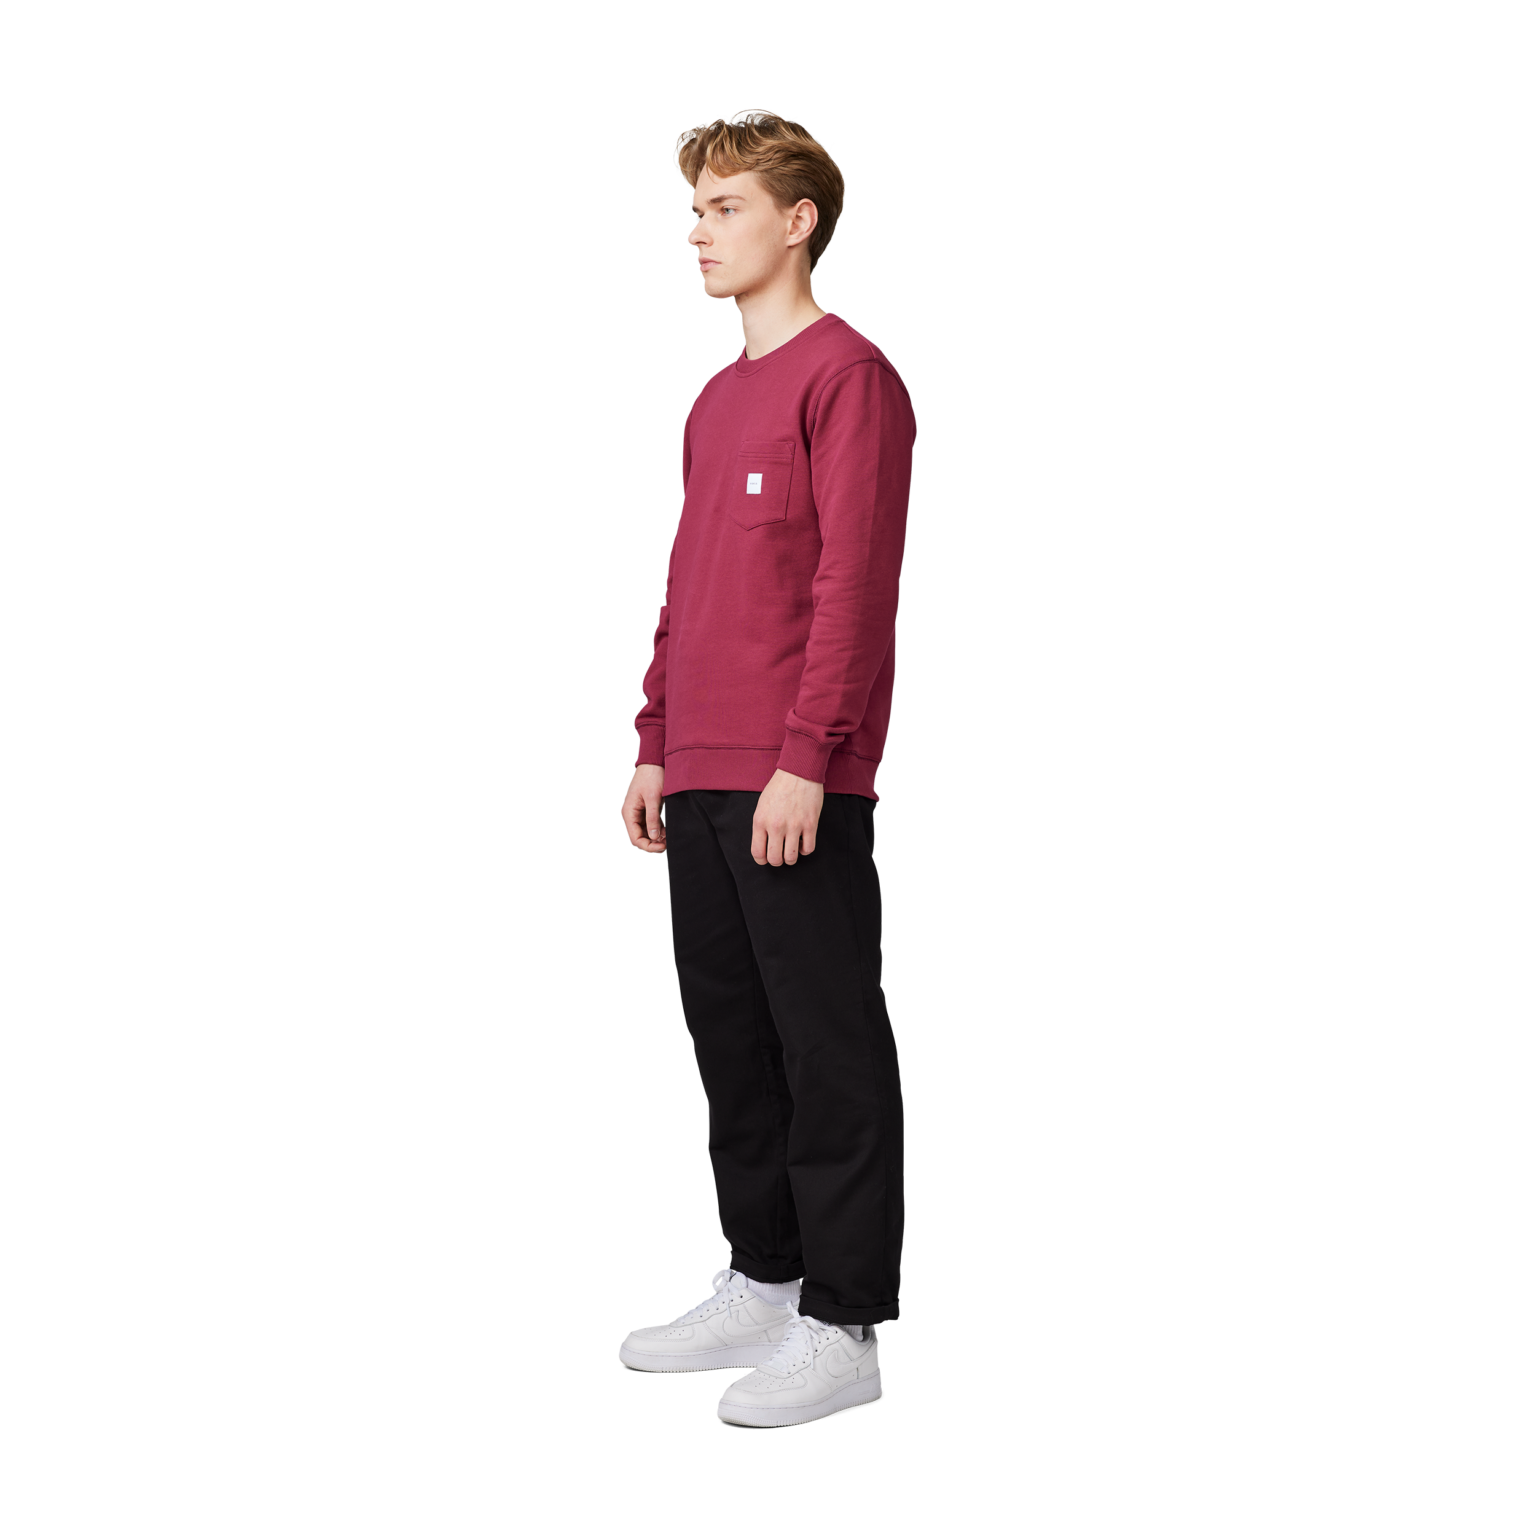 Makia Square Pocket Sweatshirt - Cranberry